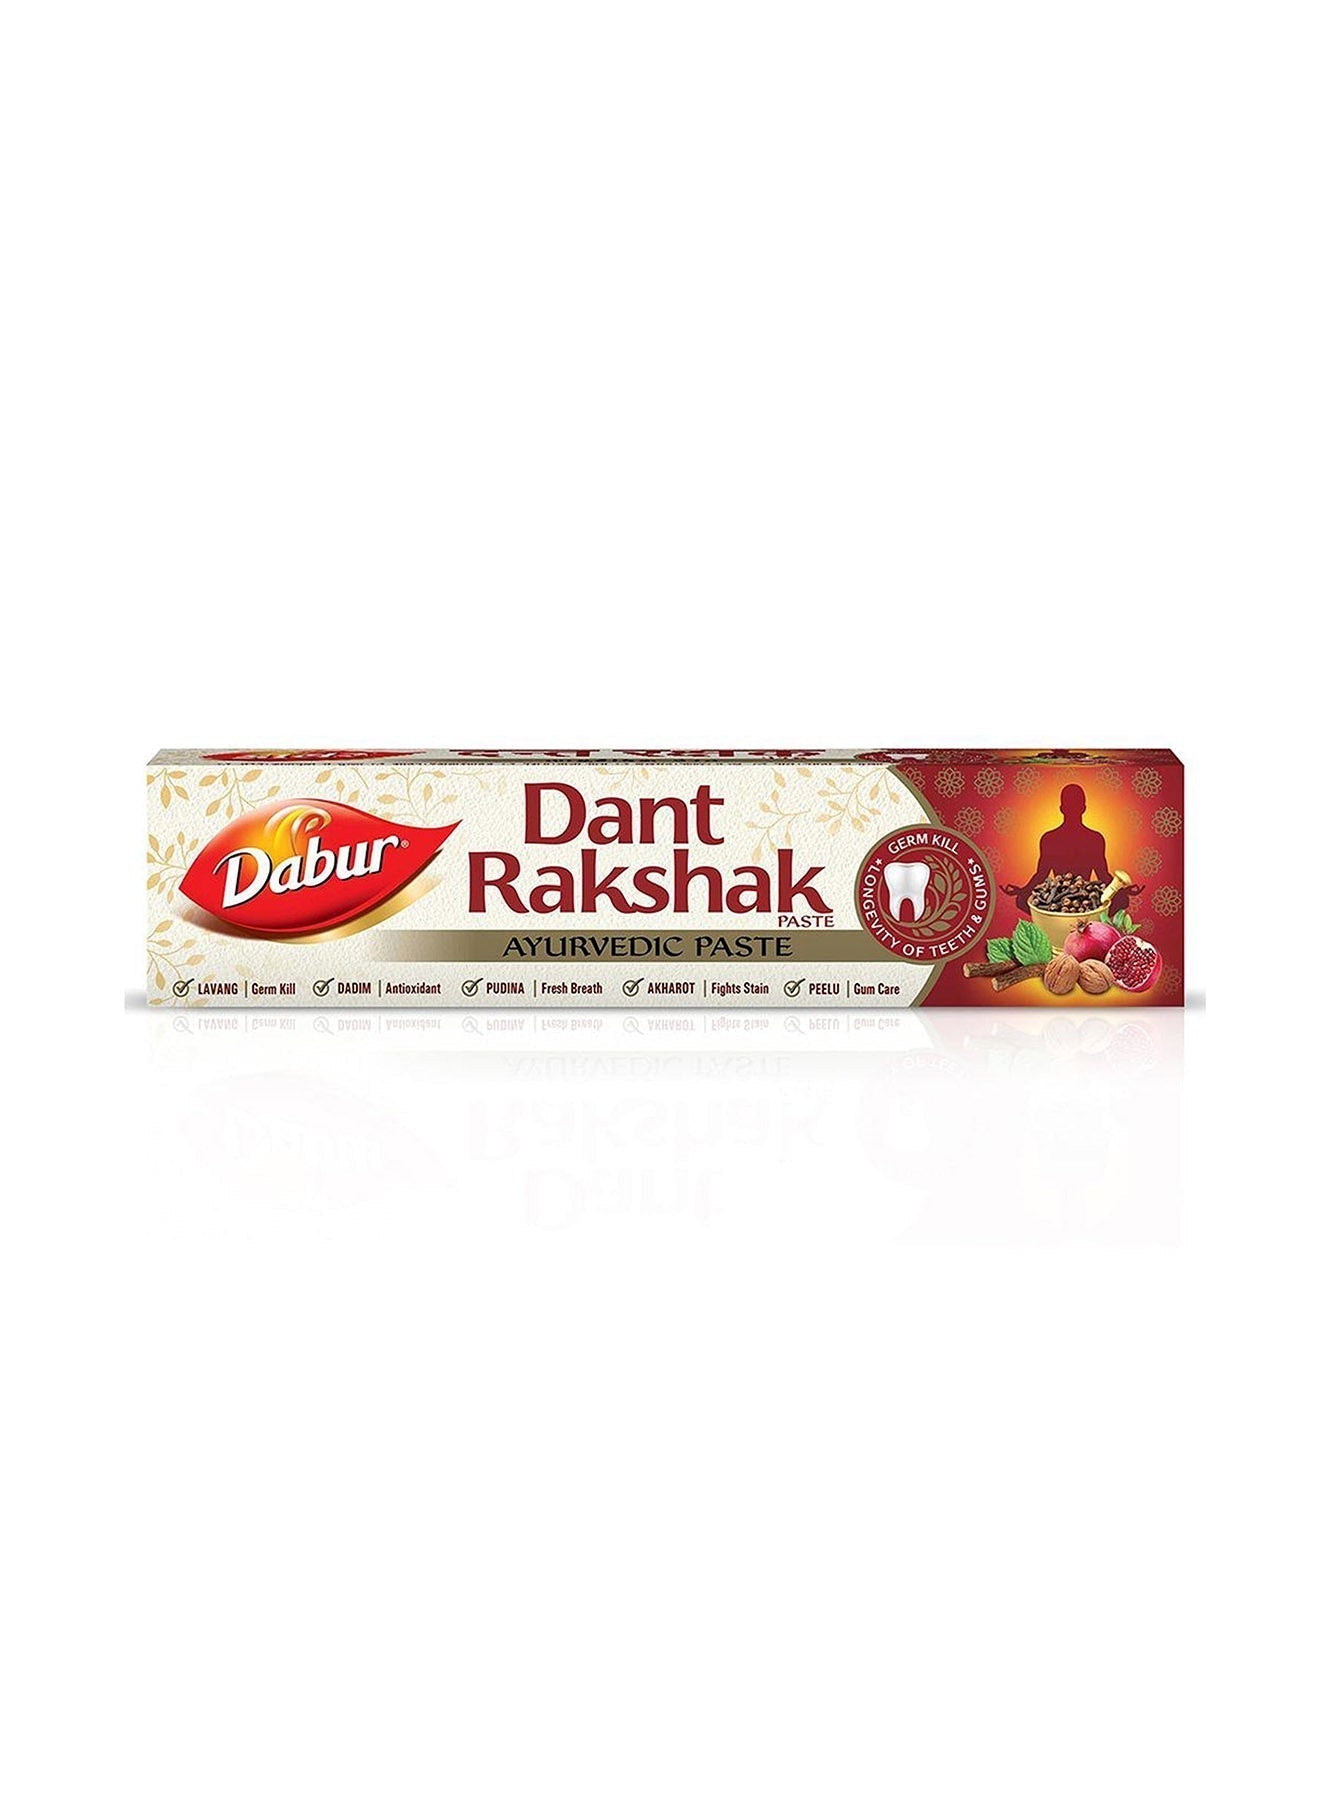 Dabur Dant Rakshak Ayurvedic Paste 175 g Value Pack of 4 